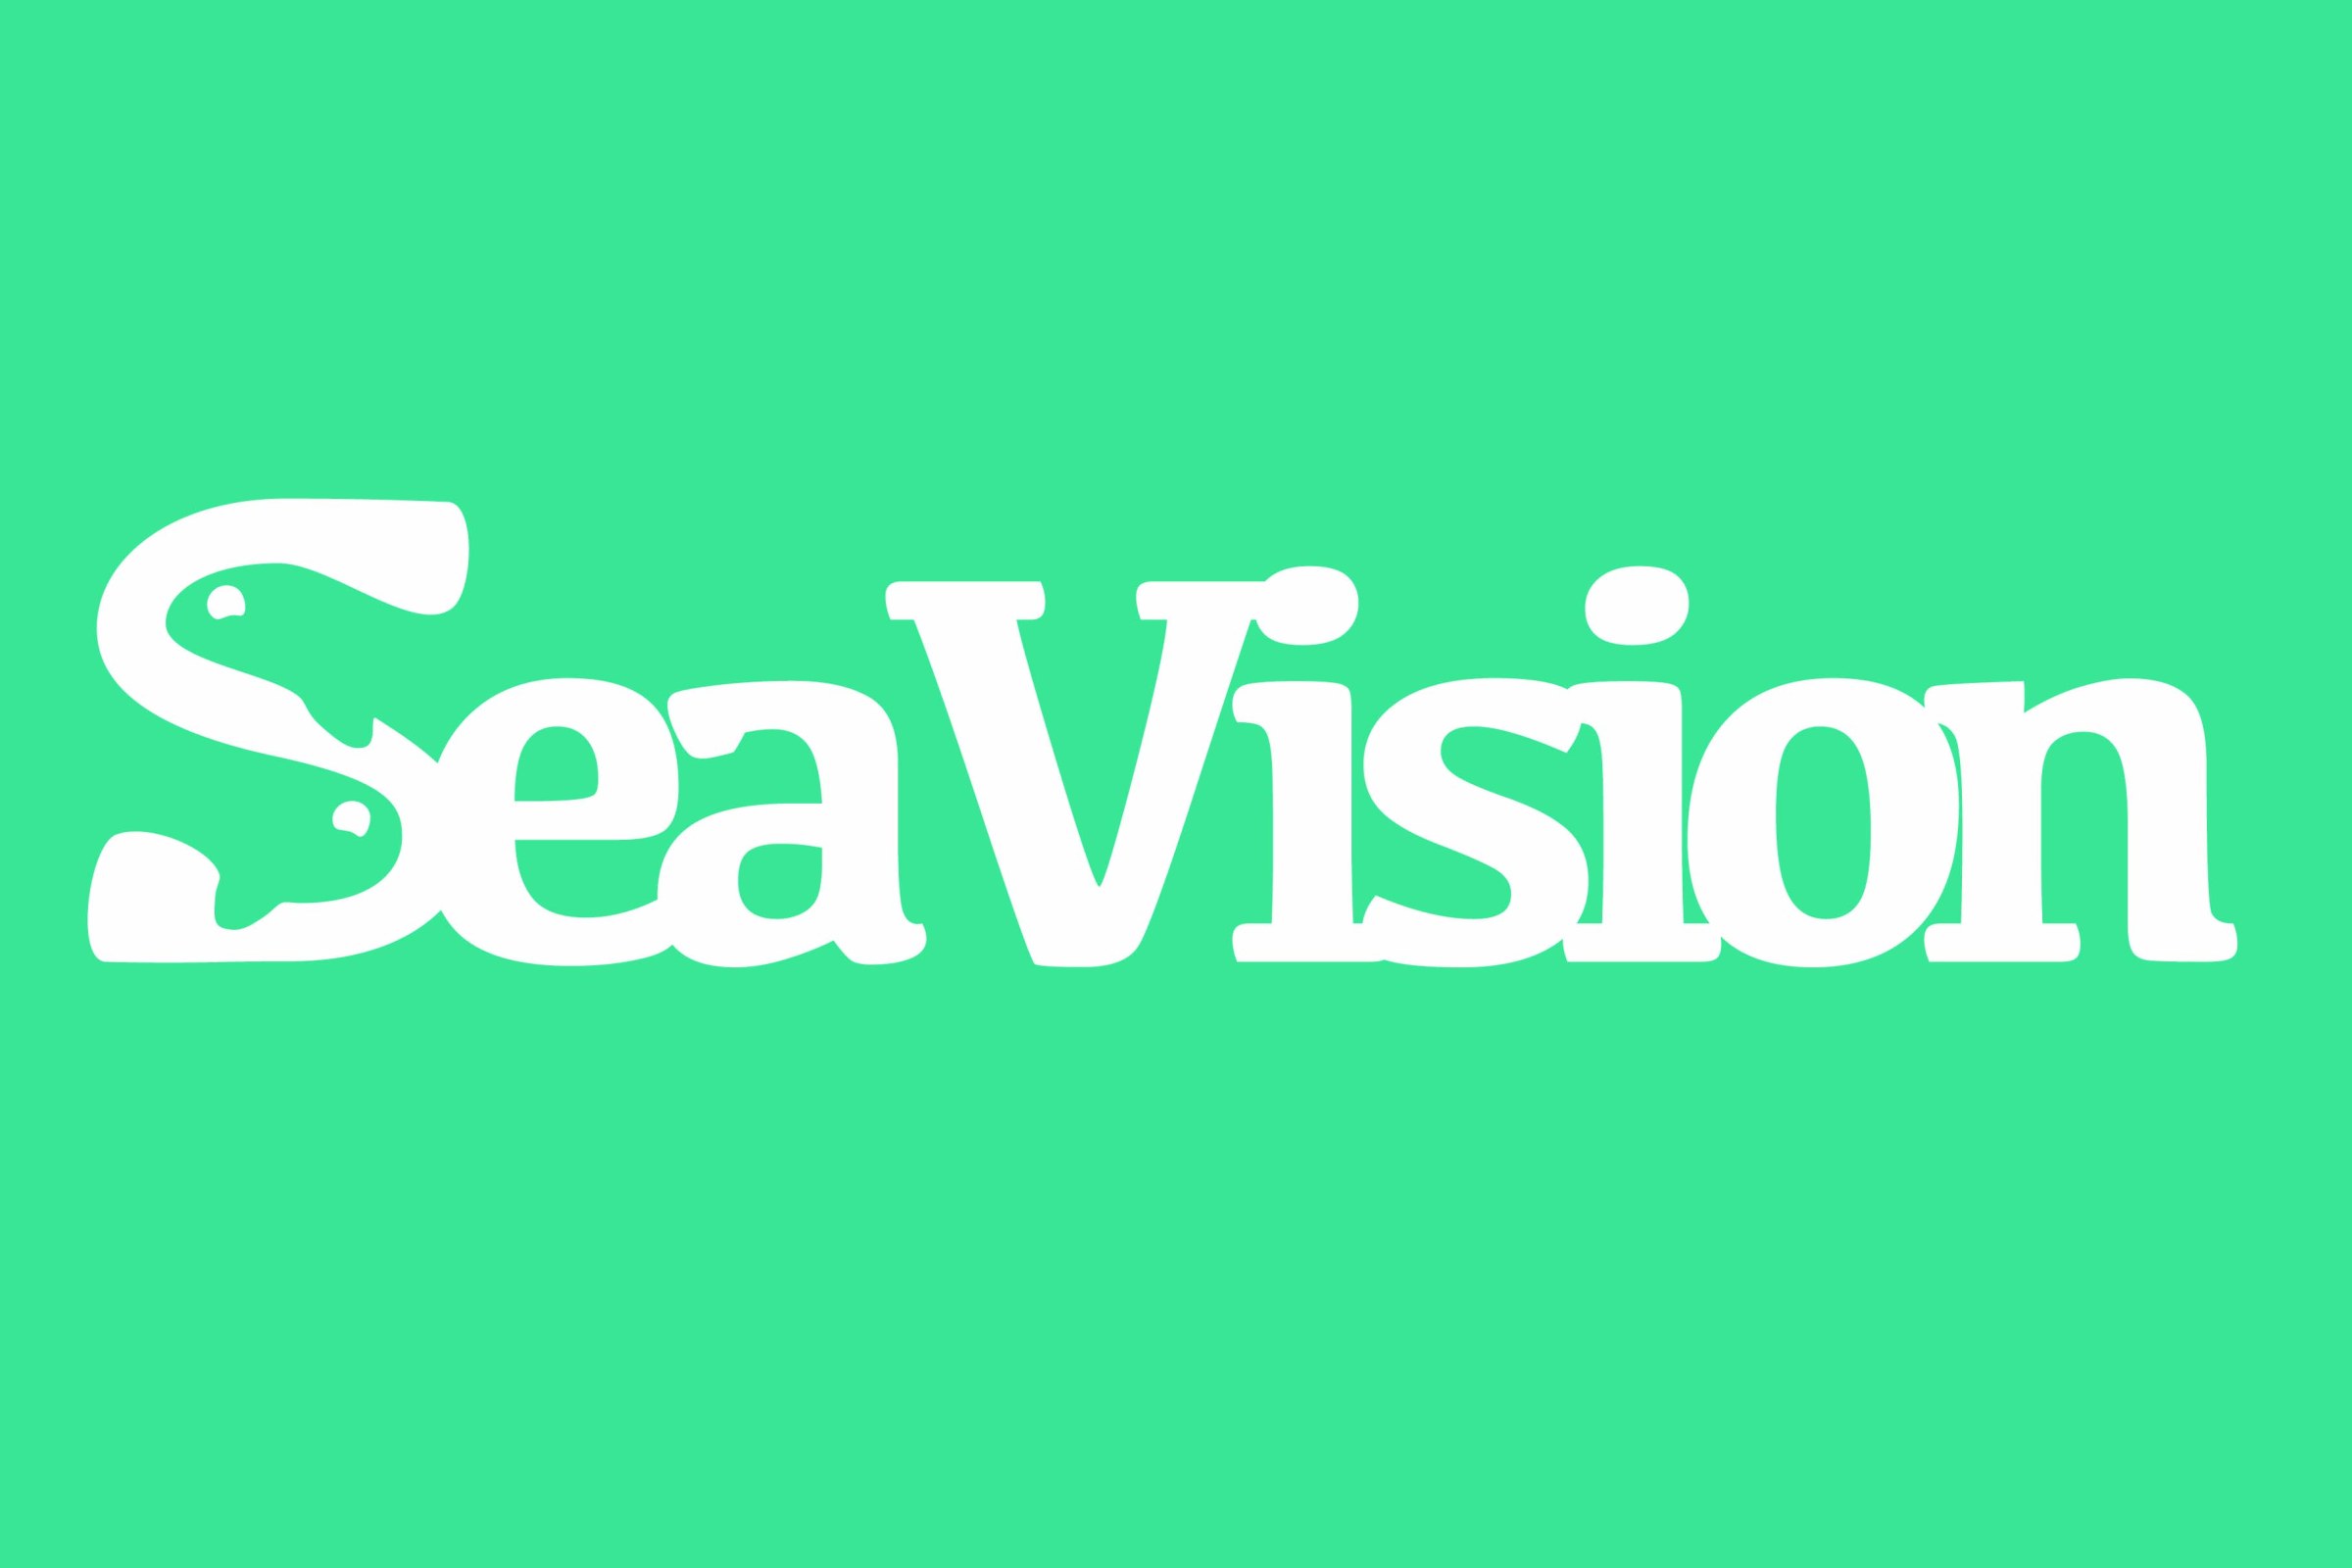 Student-designed "Sea Vision" logo